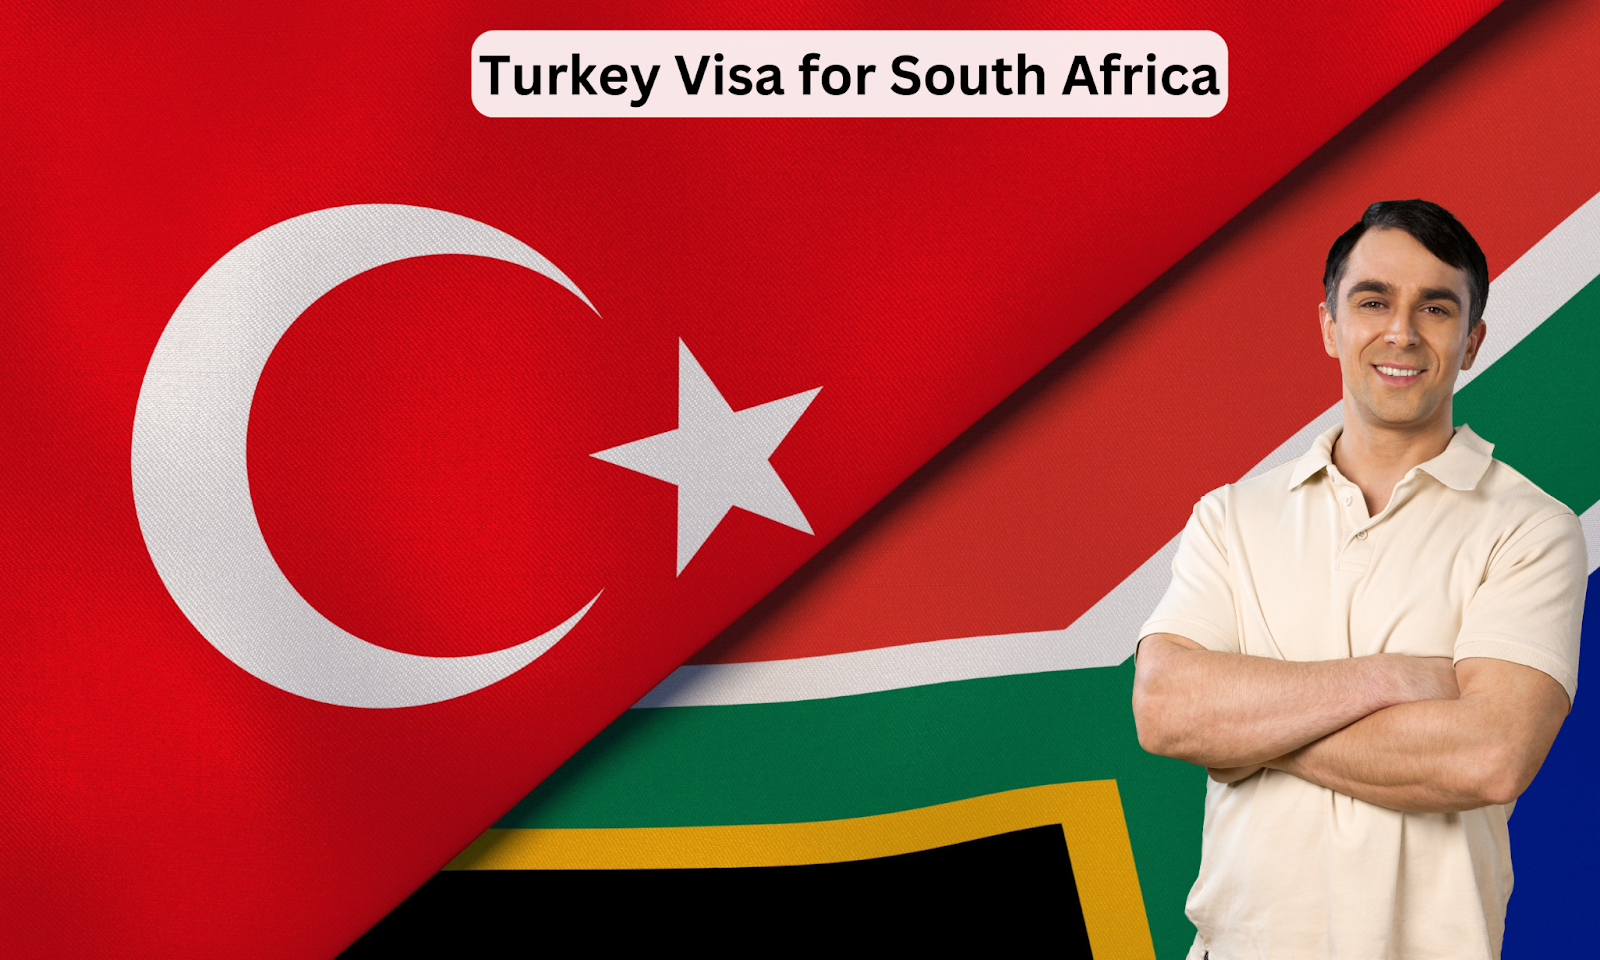 Turkey Visa for South Africa